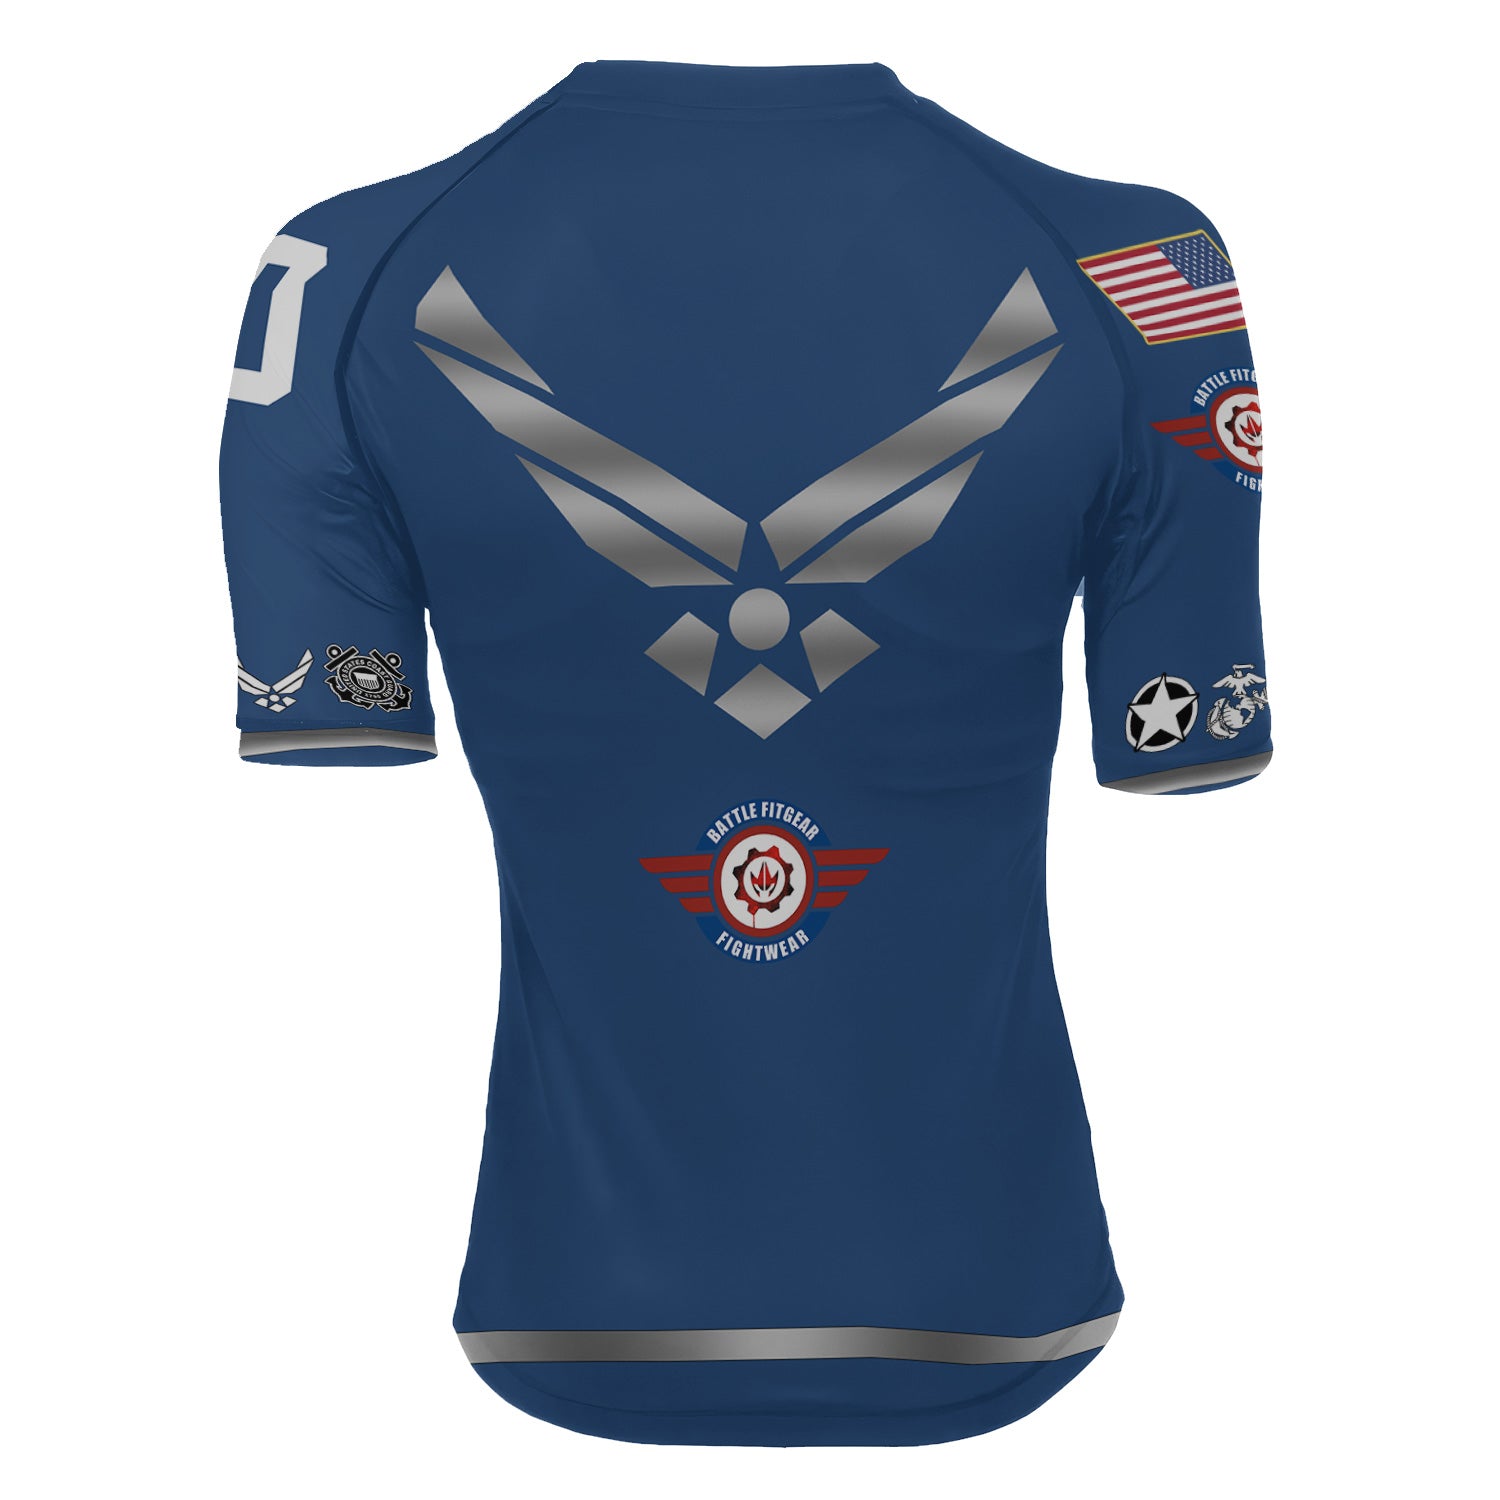 Personalized USA Air Force Veteran Women's Short Sleeve Rash Guard